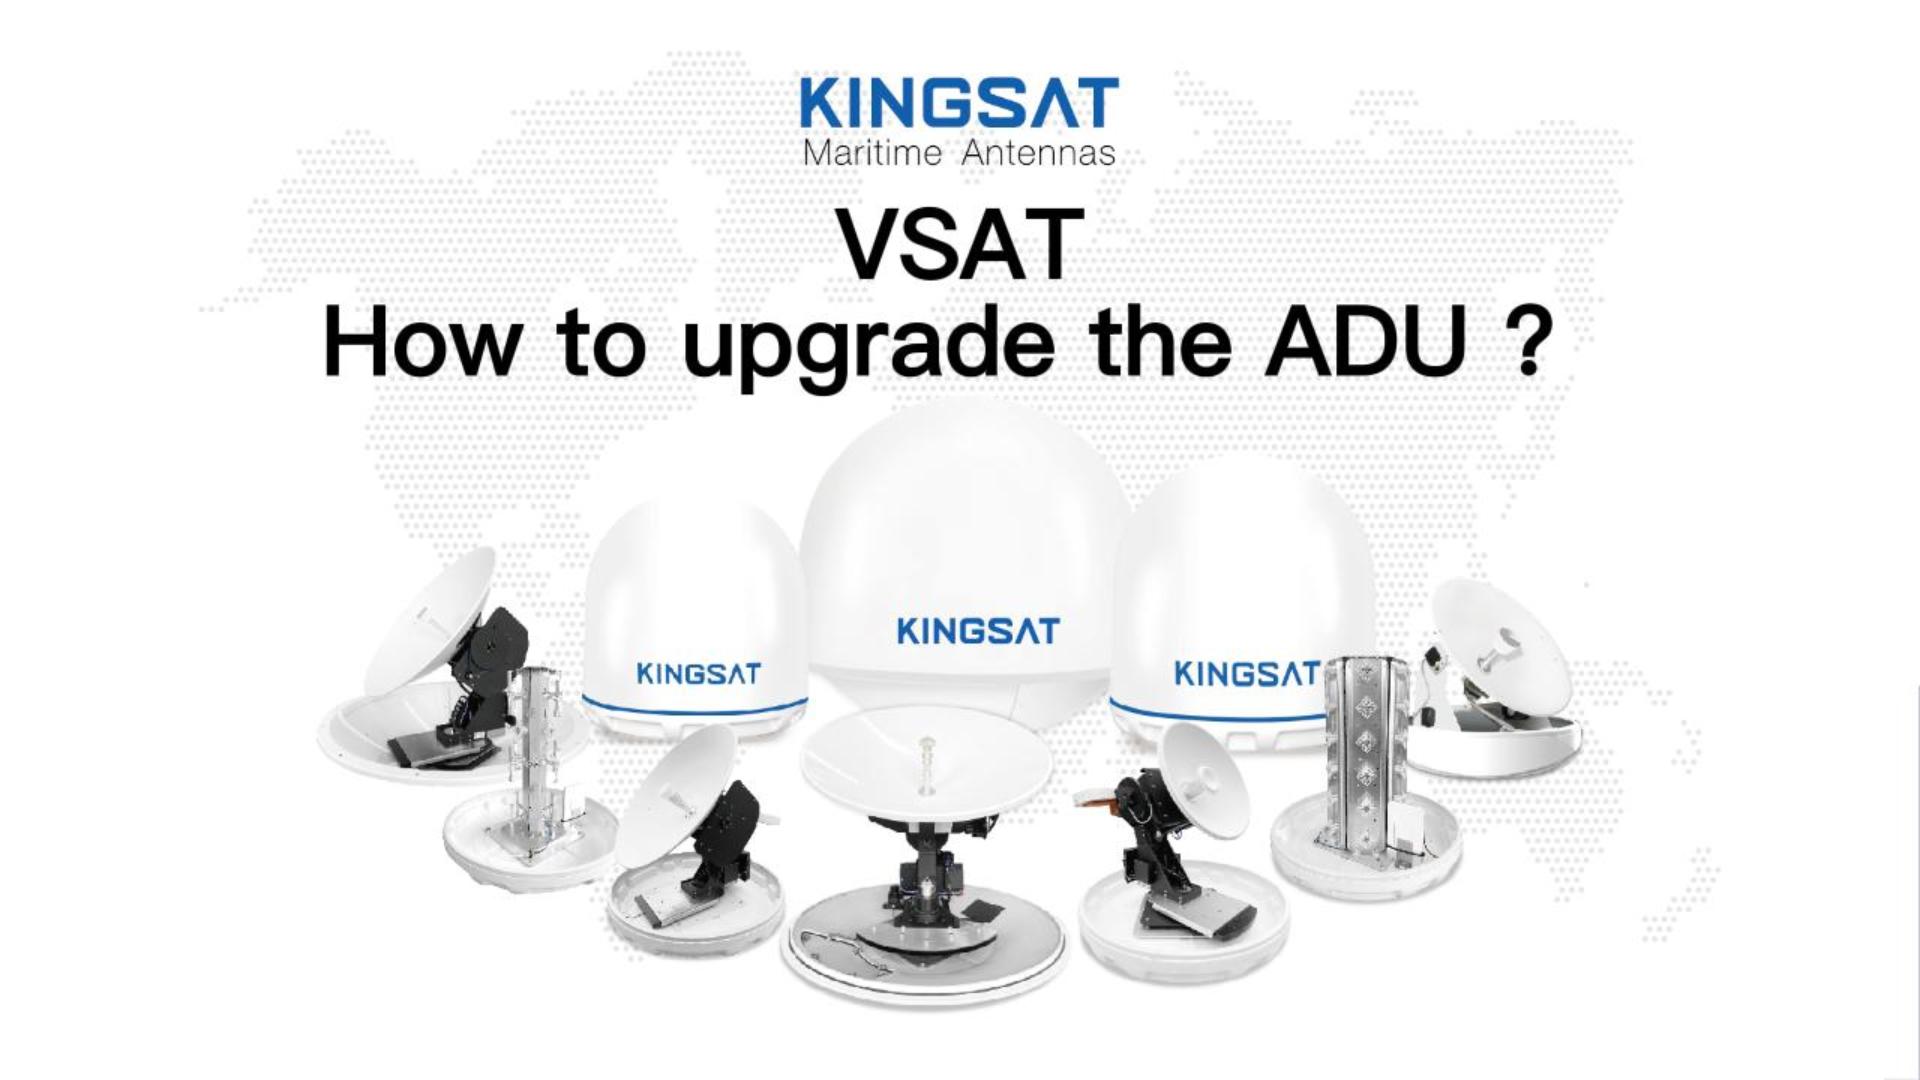 How to upgrade ADU?